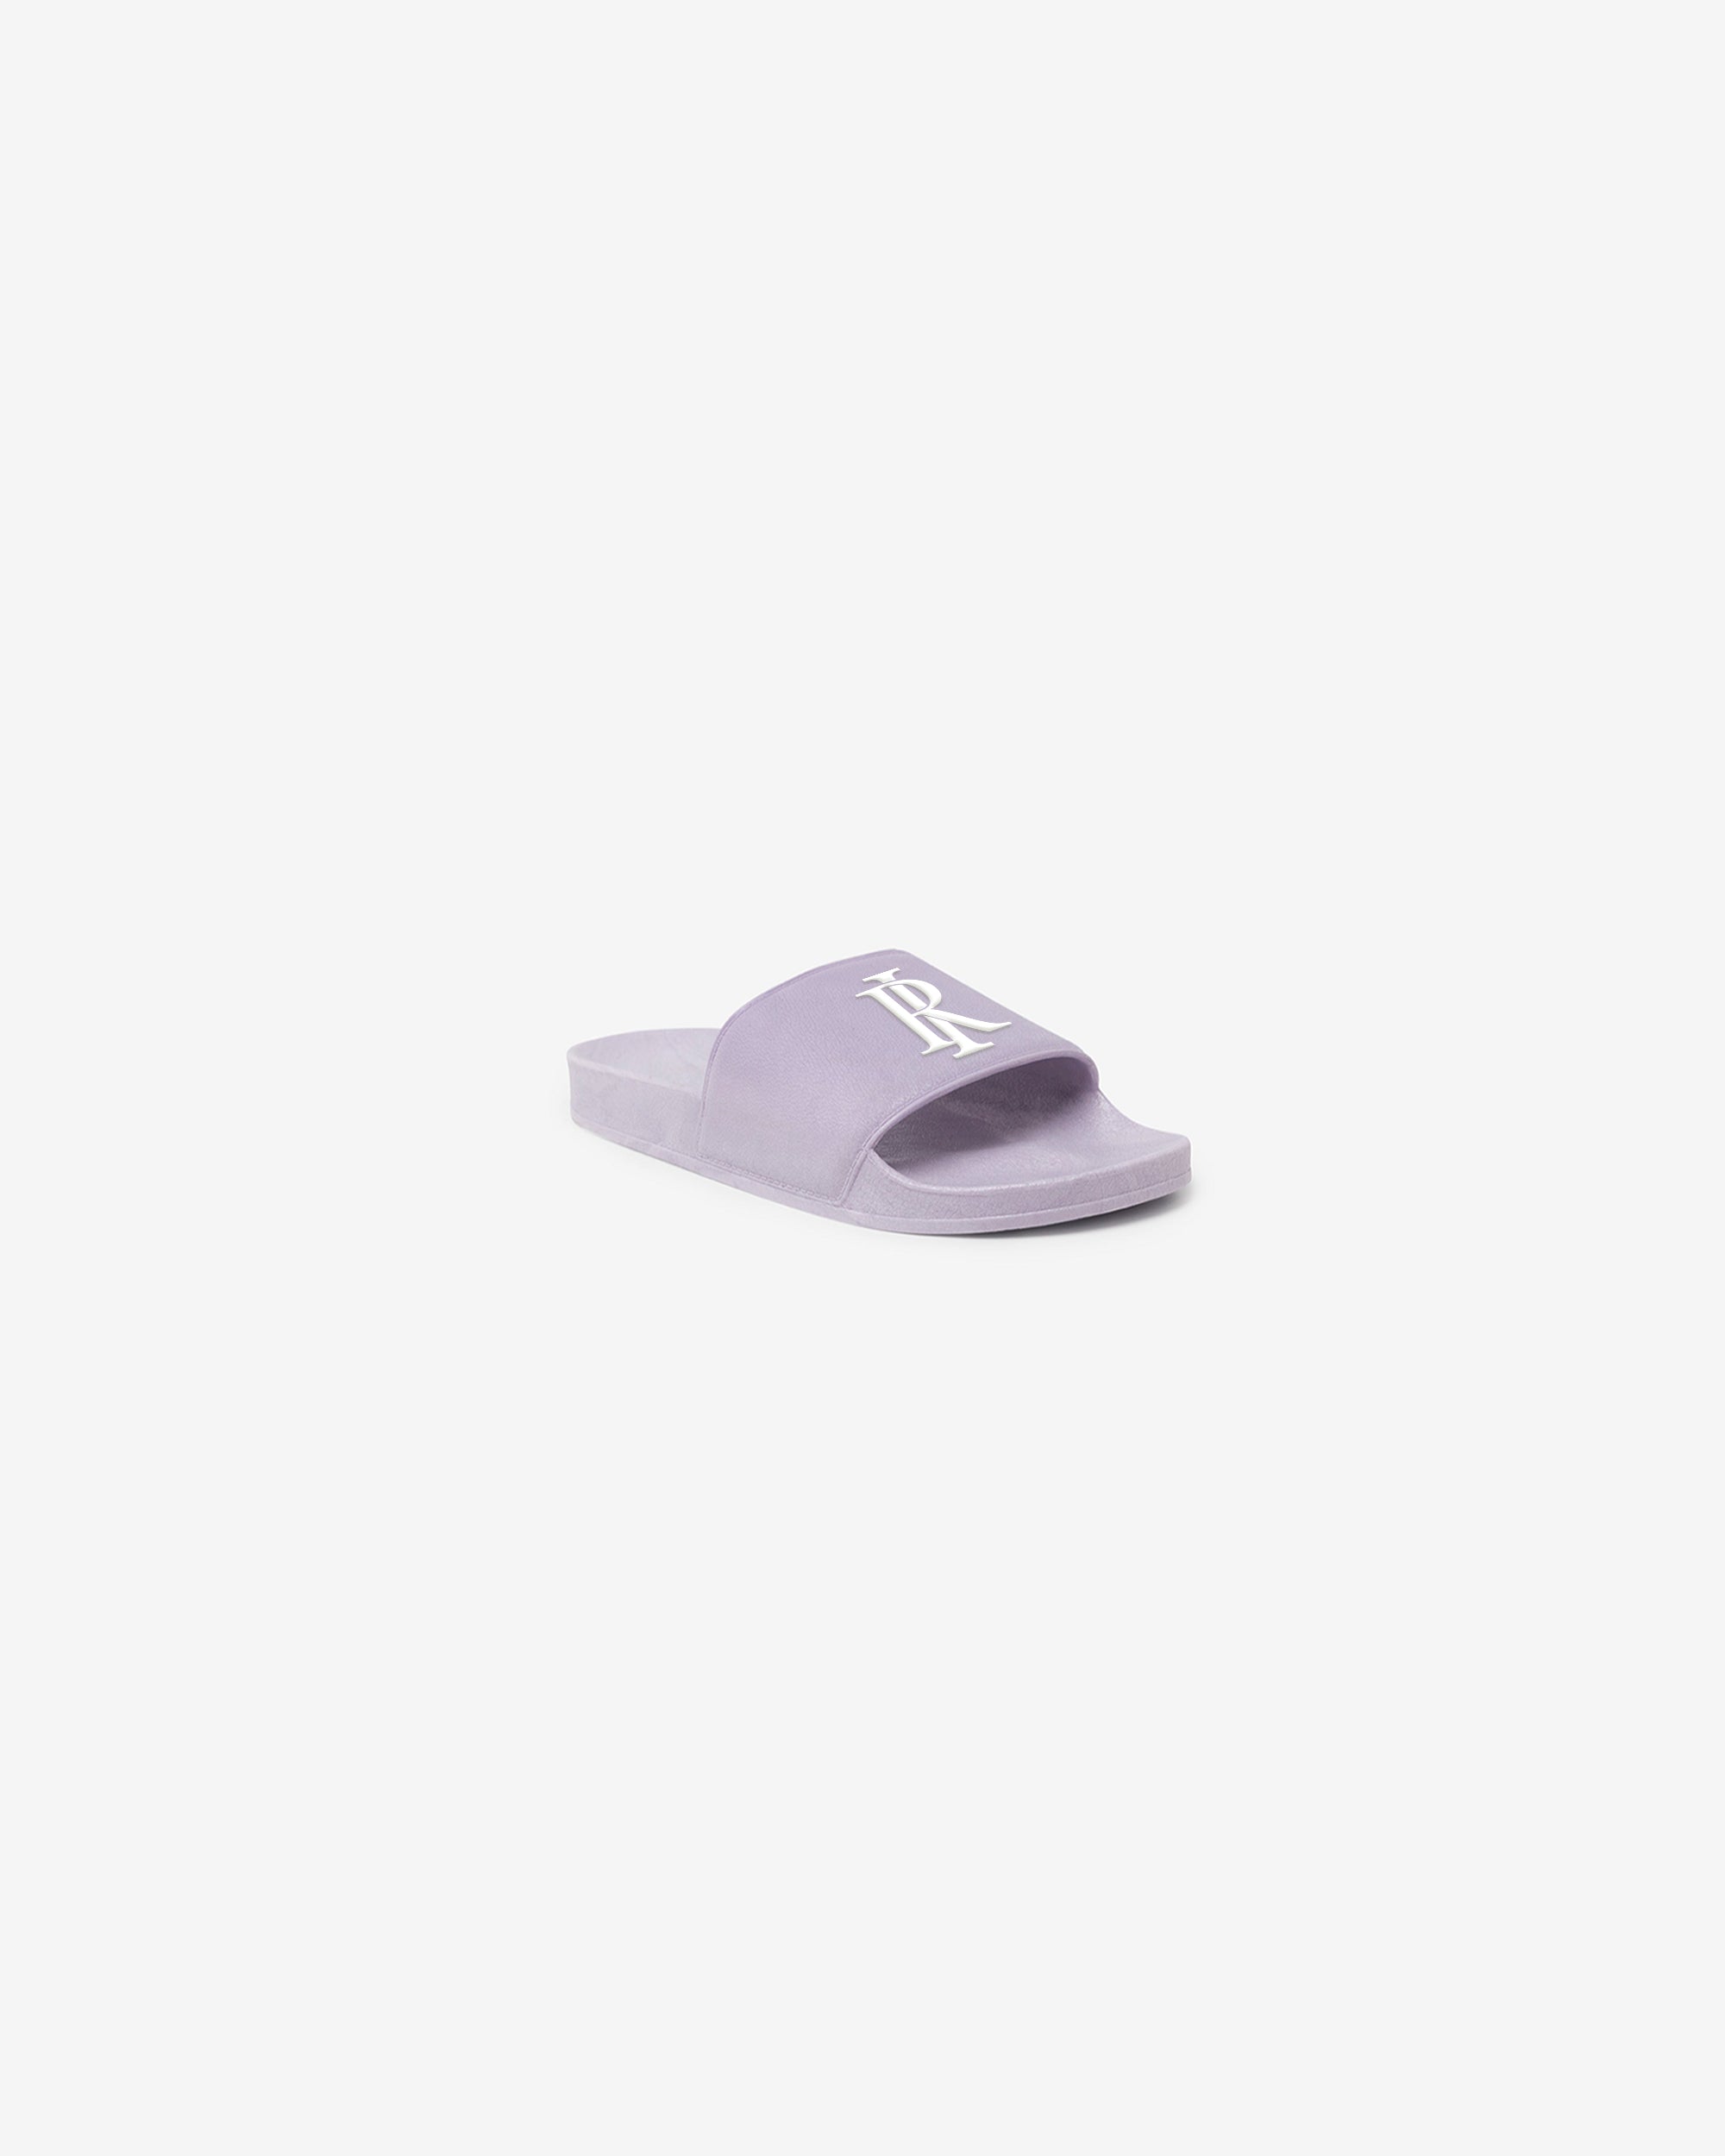 Monogram Slides - Lavender